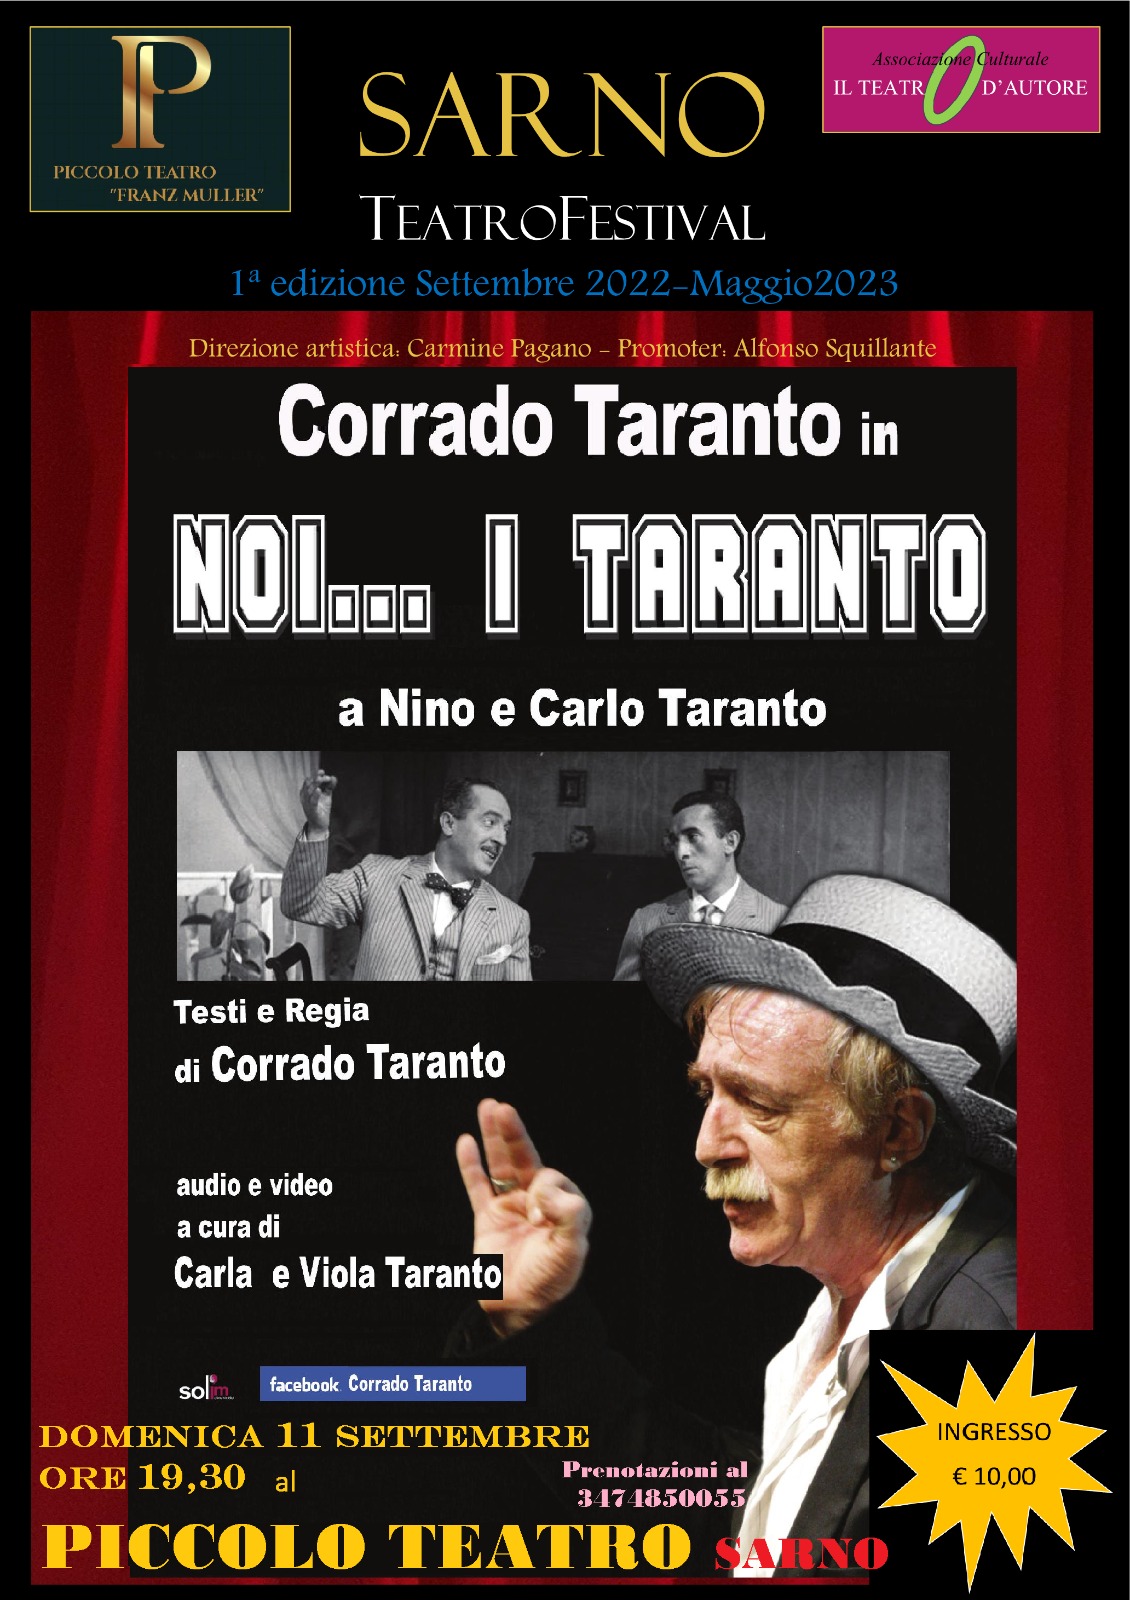 Sarno: Piccolo Teatro “Franz Muller”, Corrado Taranto al Sarno Teatro Festival “NOI…I TARANTO”